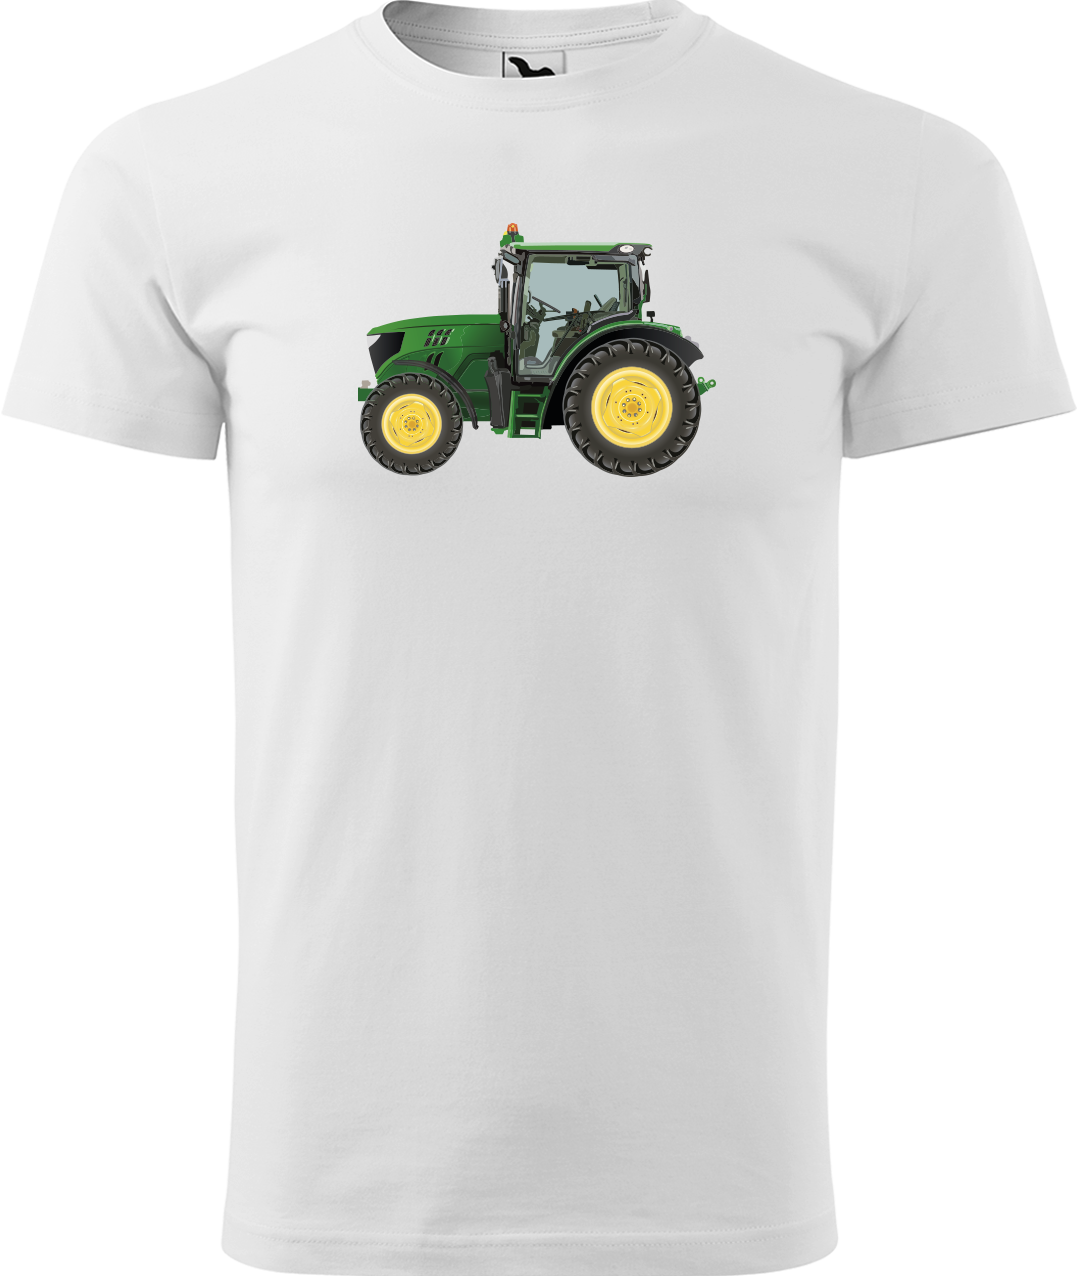 Tričko s traktorem - Zelený traktor Velikost: XL, Barva: Bílá (00)